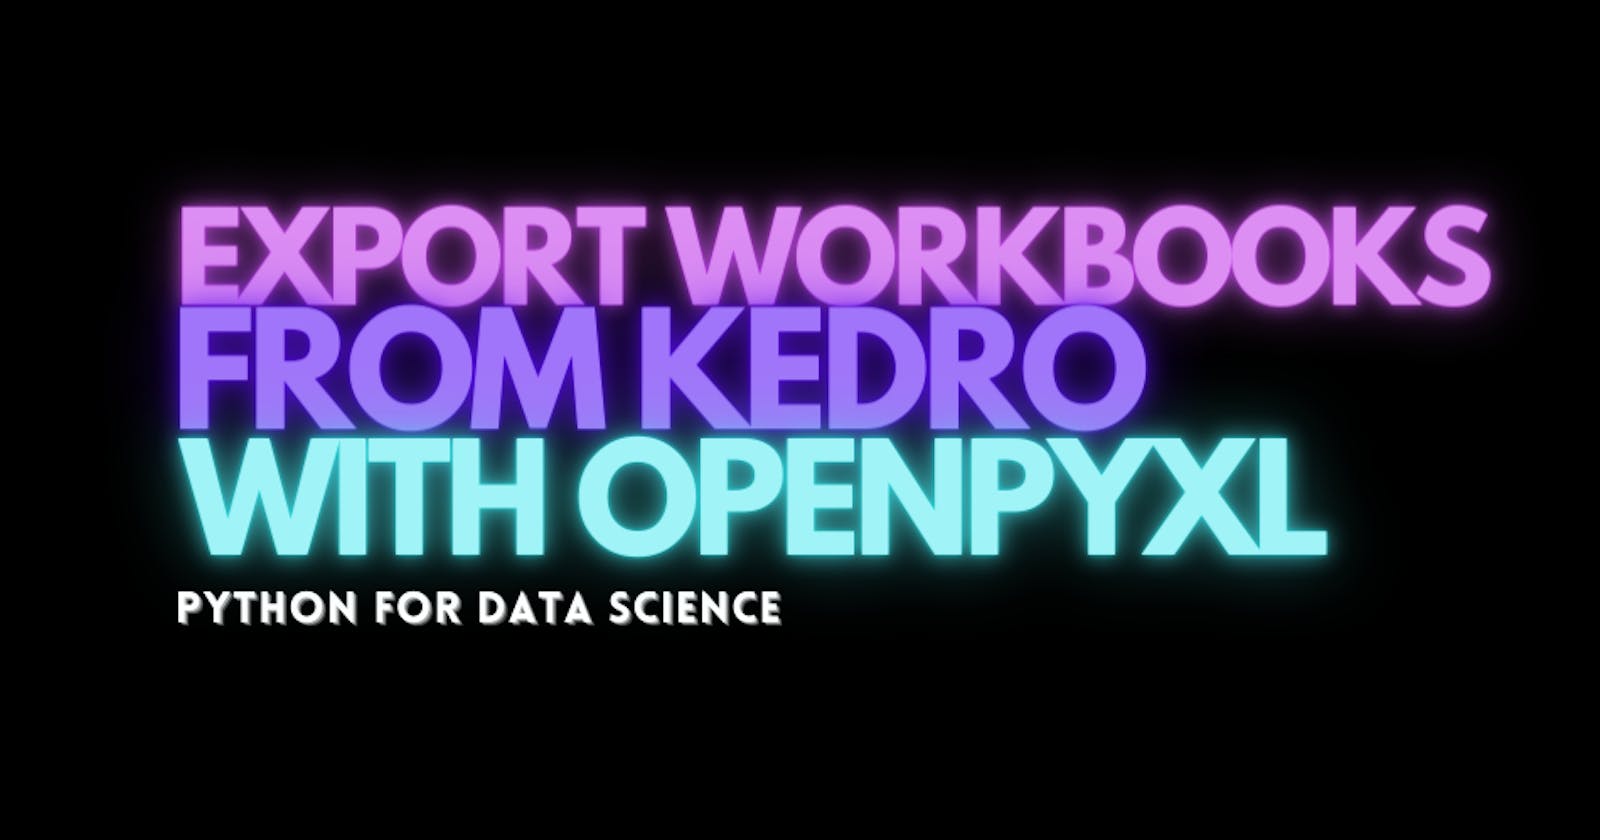 Exporting Workbooks from Kedro with Openpyxl